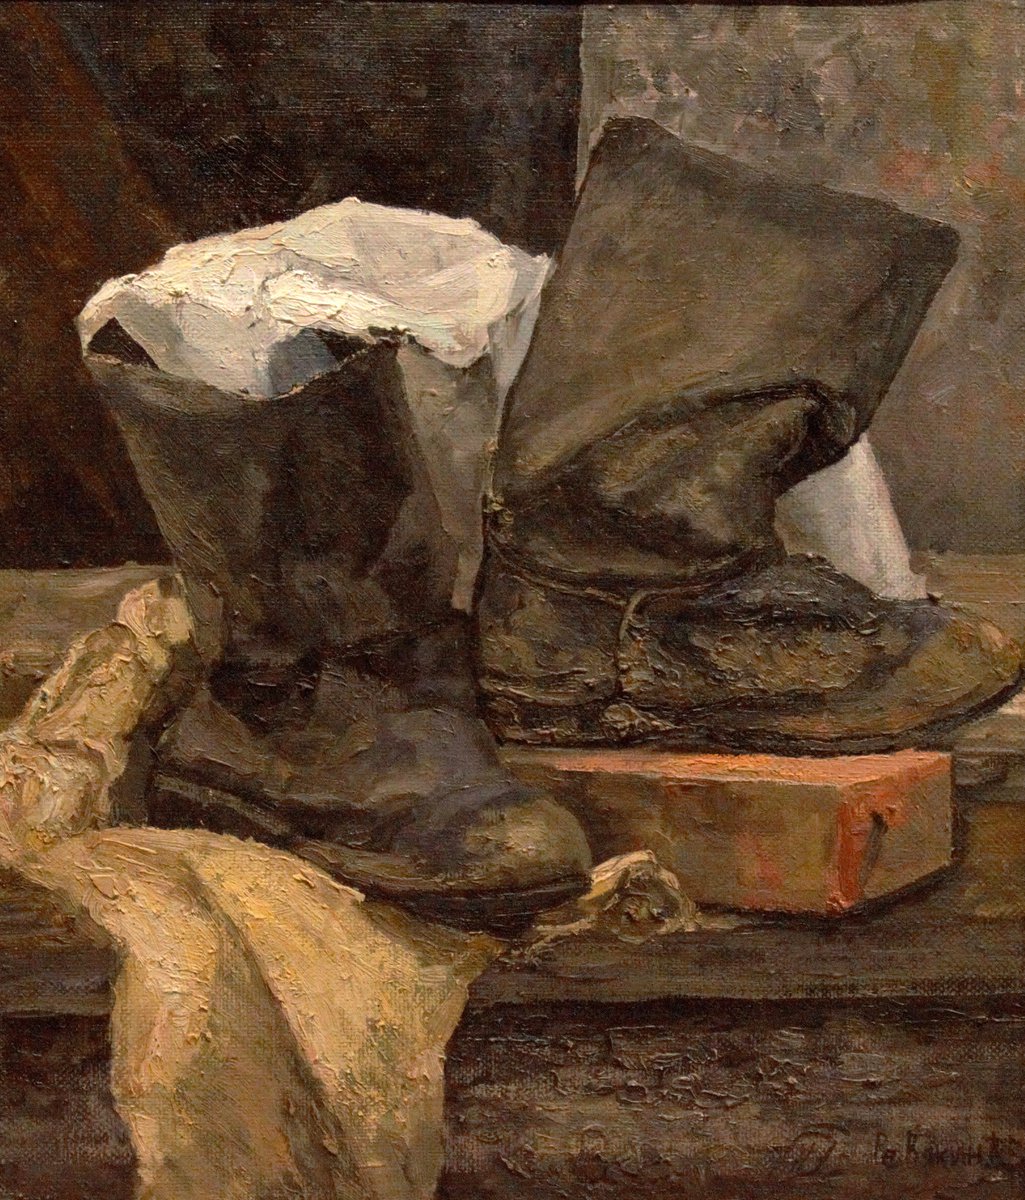 Grandpa farmers boots. Still life realism oil painting by Dmitry Revyakin